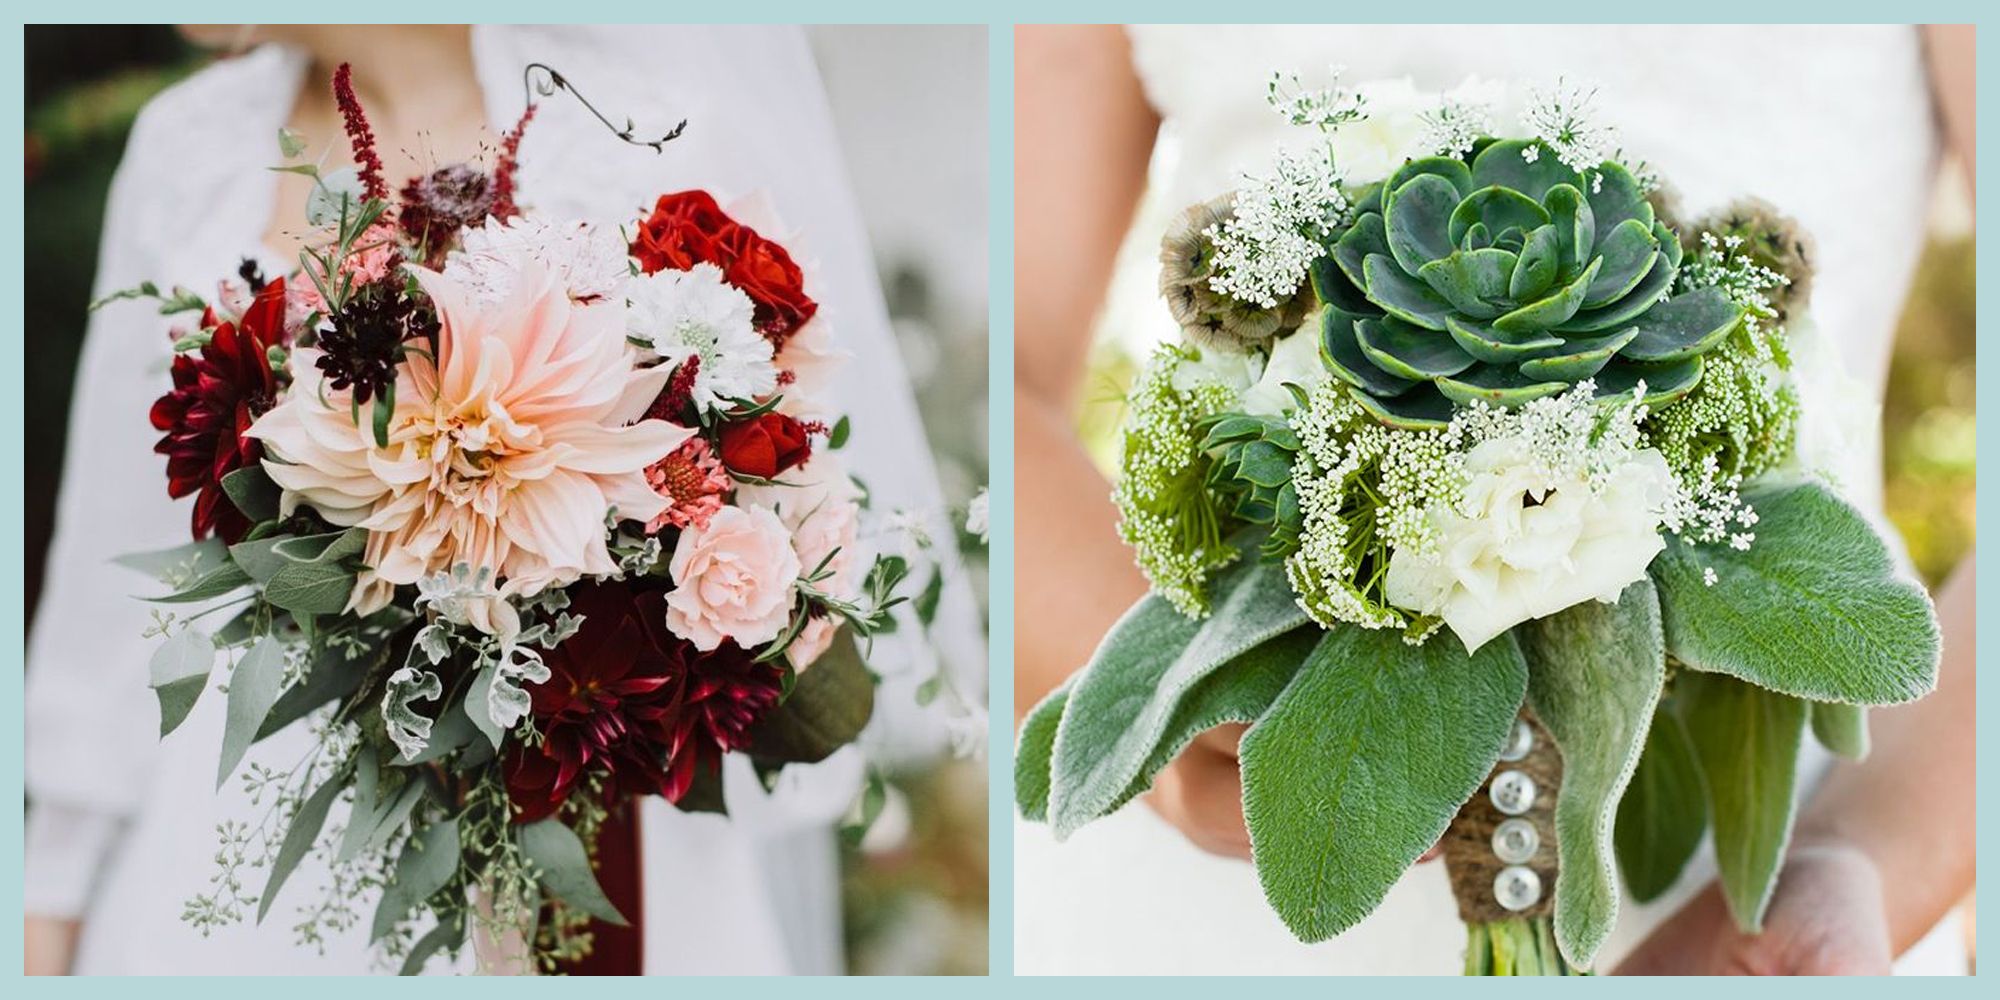 Gorgeous Winter Wedding Bouquet Ideas for Winter Weddings